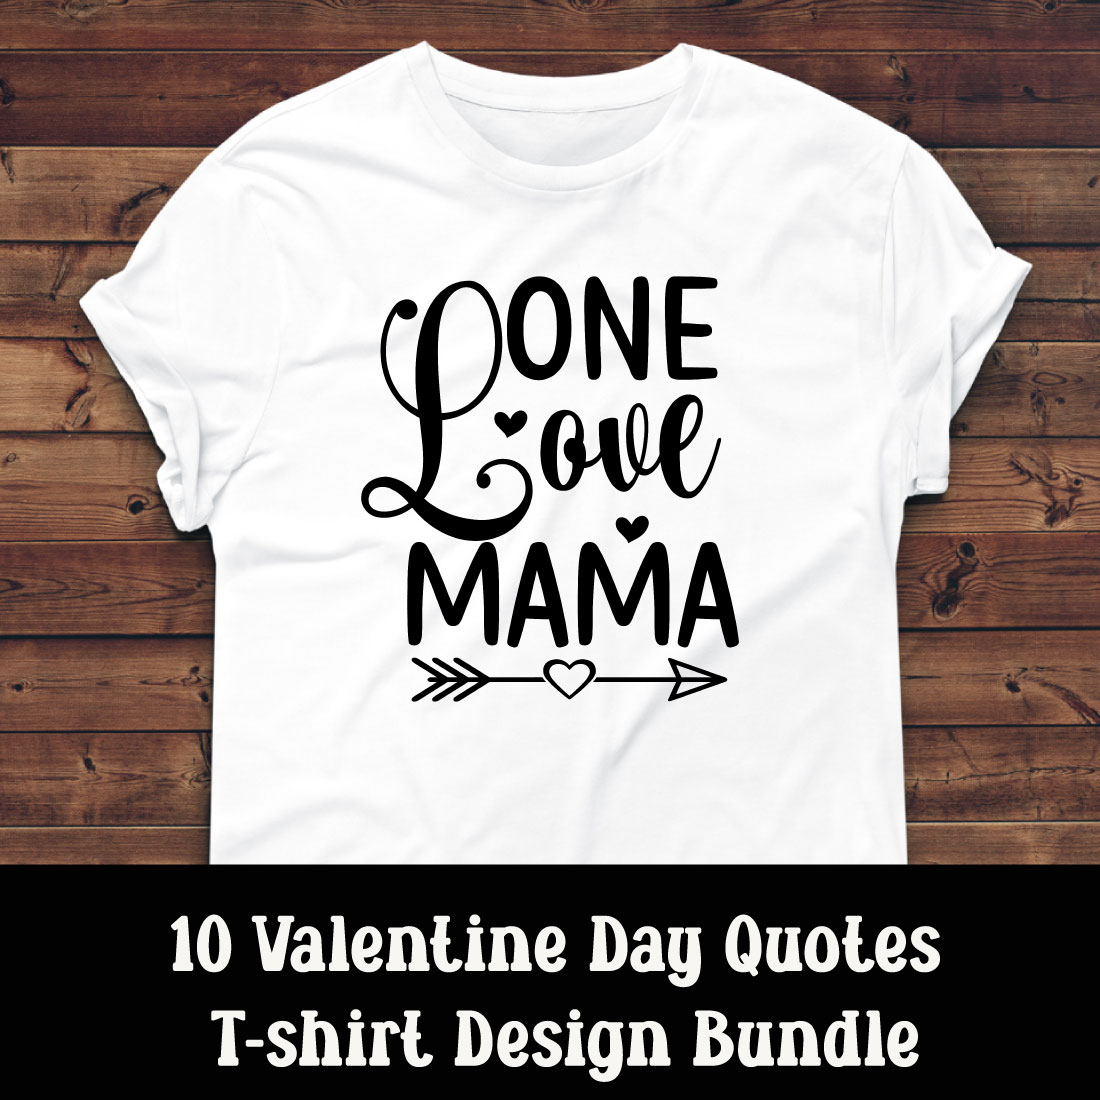 T-shirt Valentine Day Quotes Design Bundle cover image.